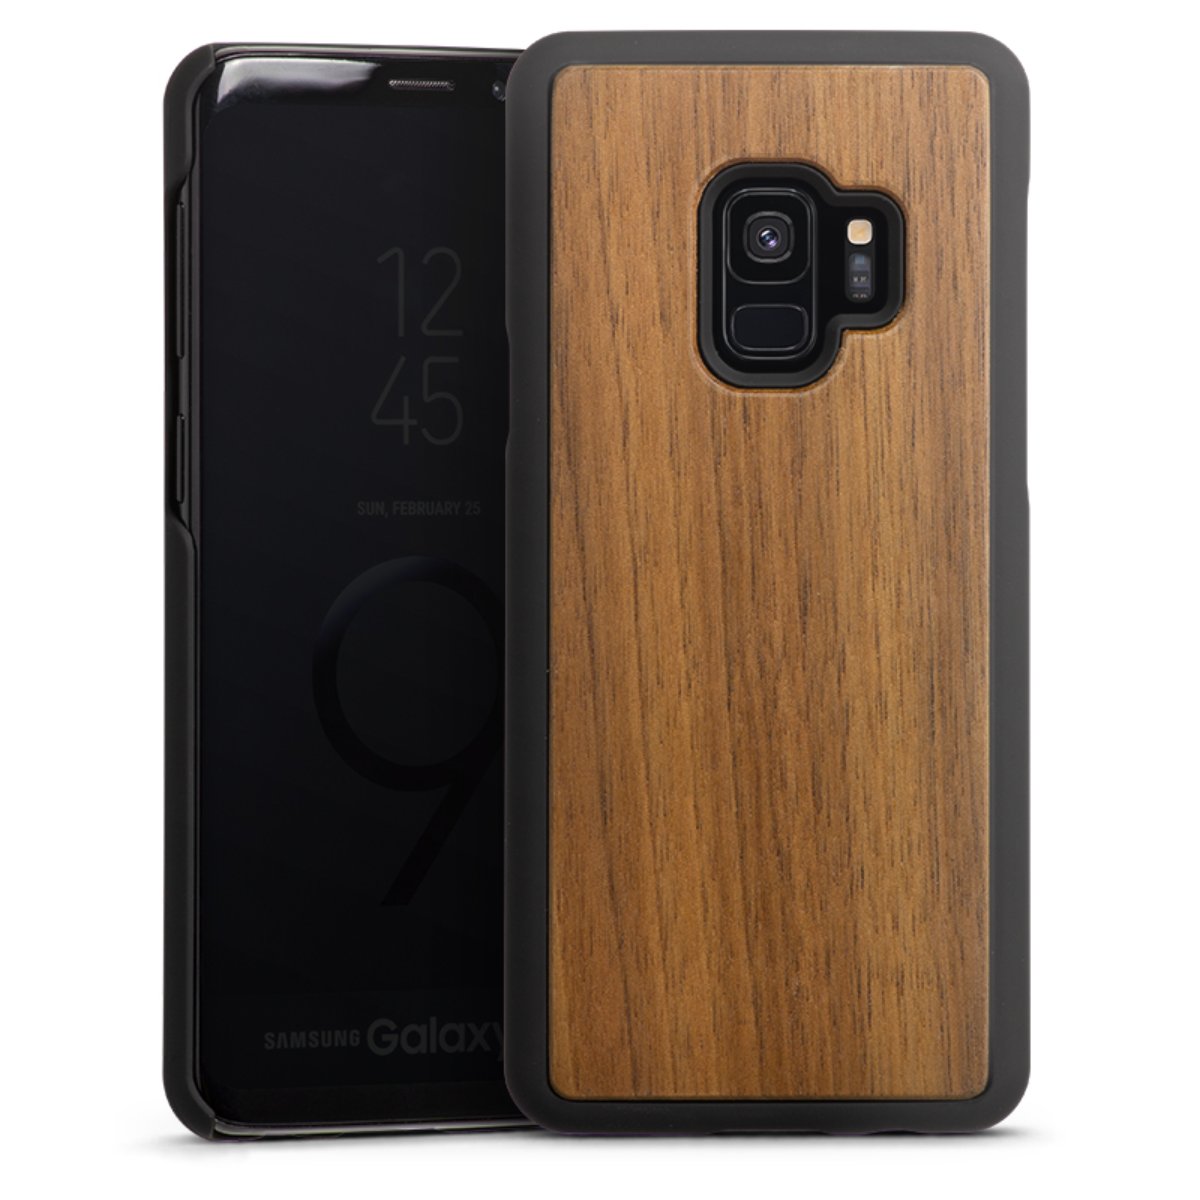 Wooden Hard Case voor Samsung Galaxy S9